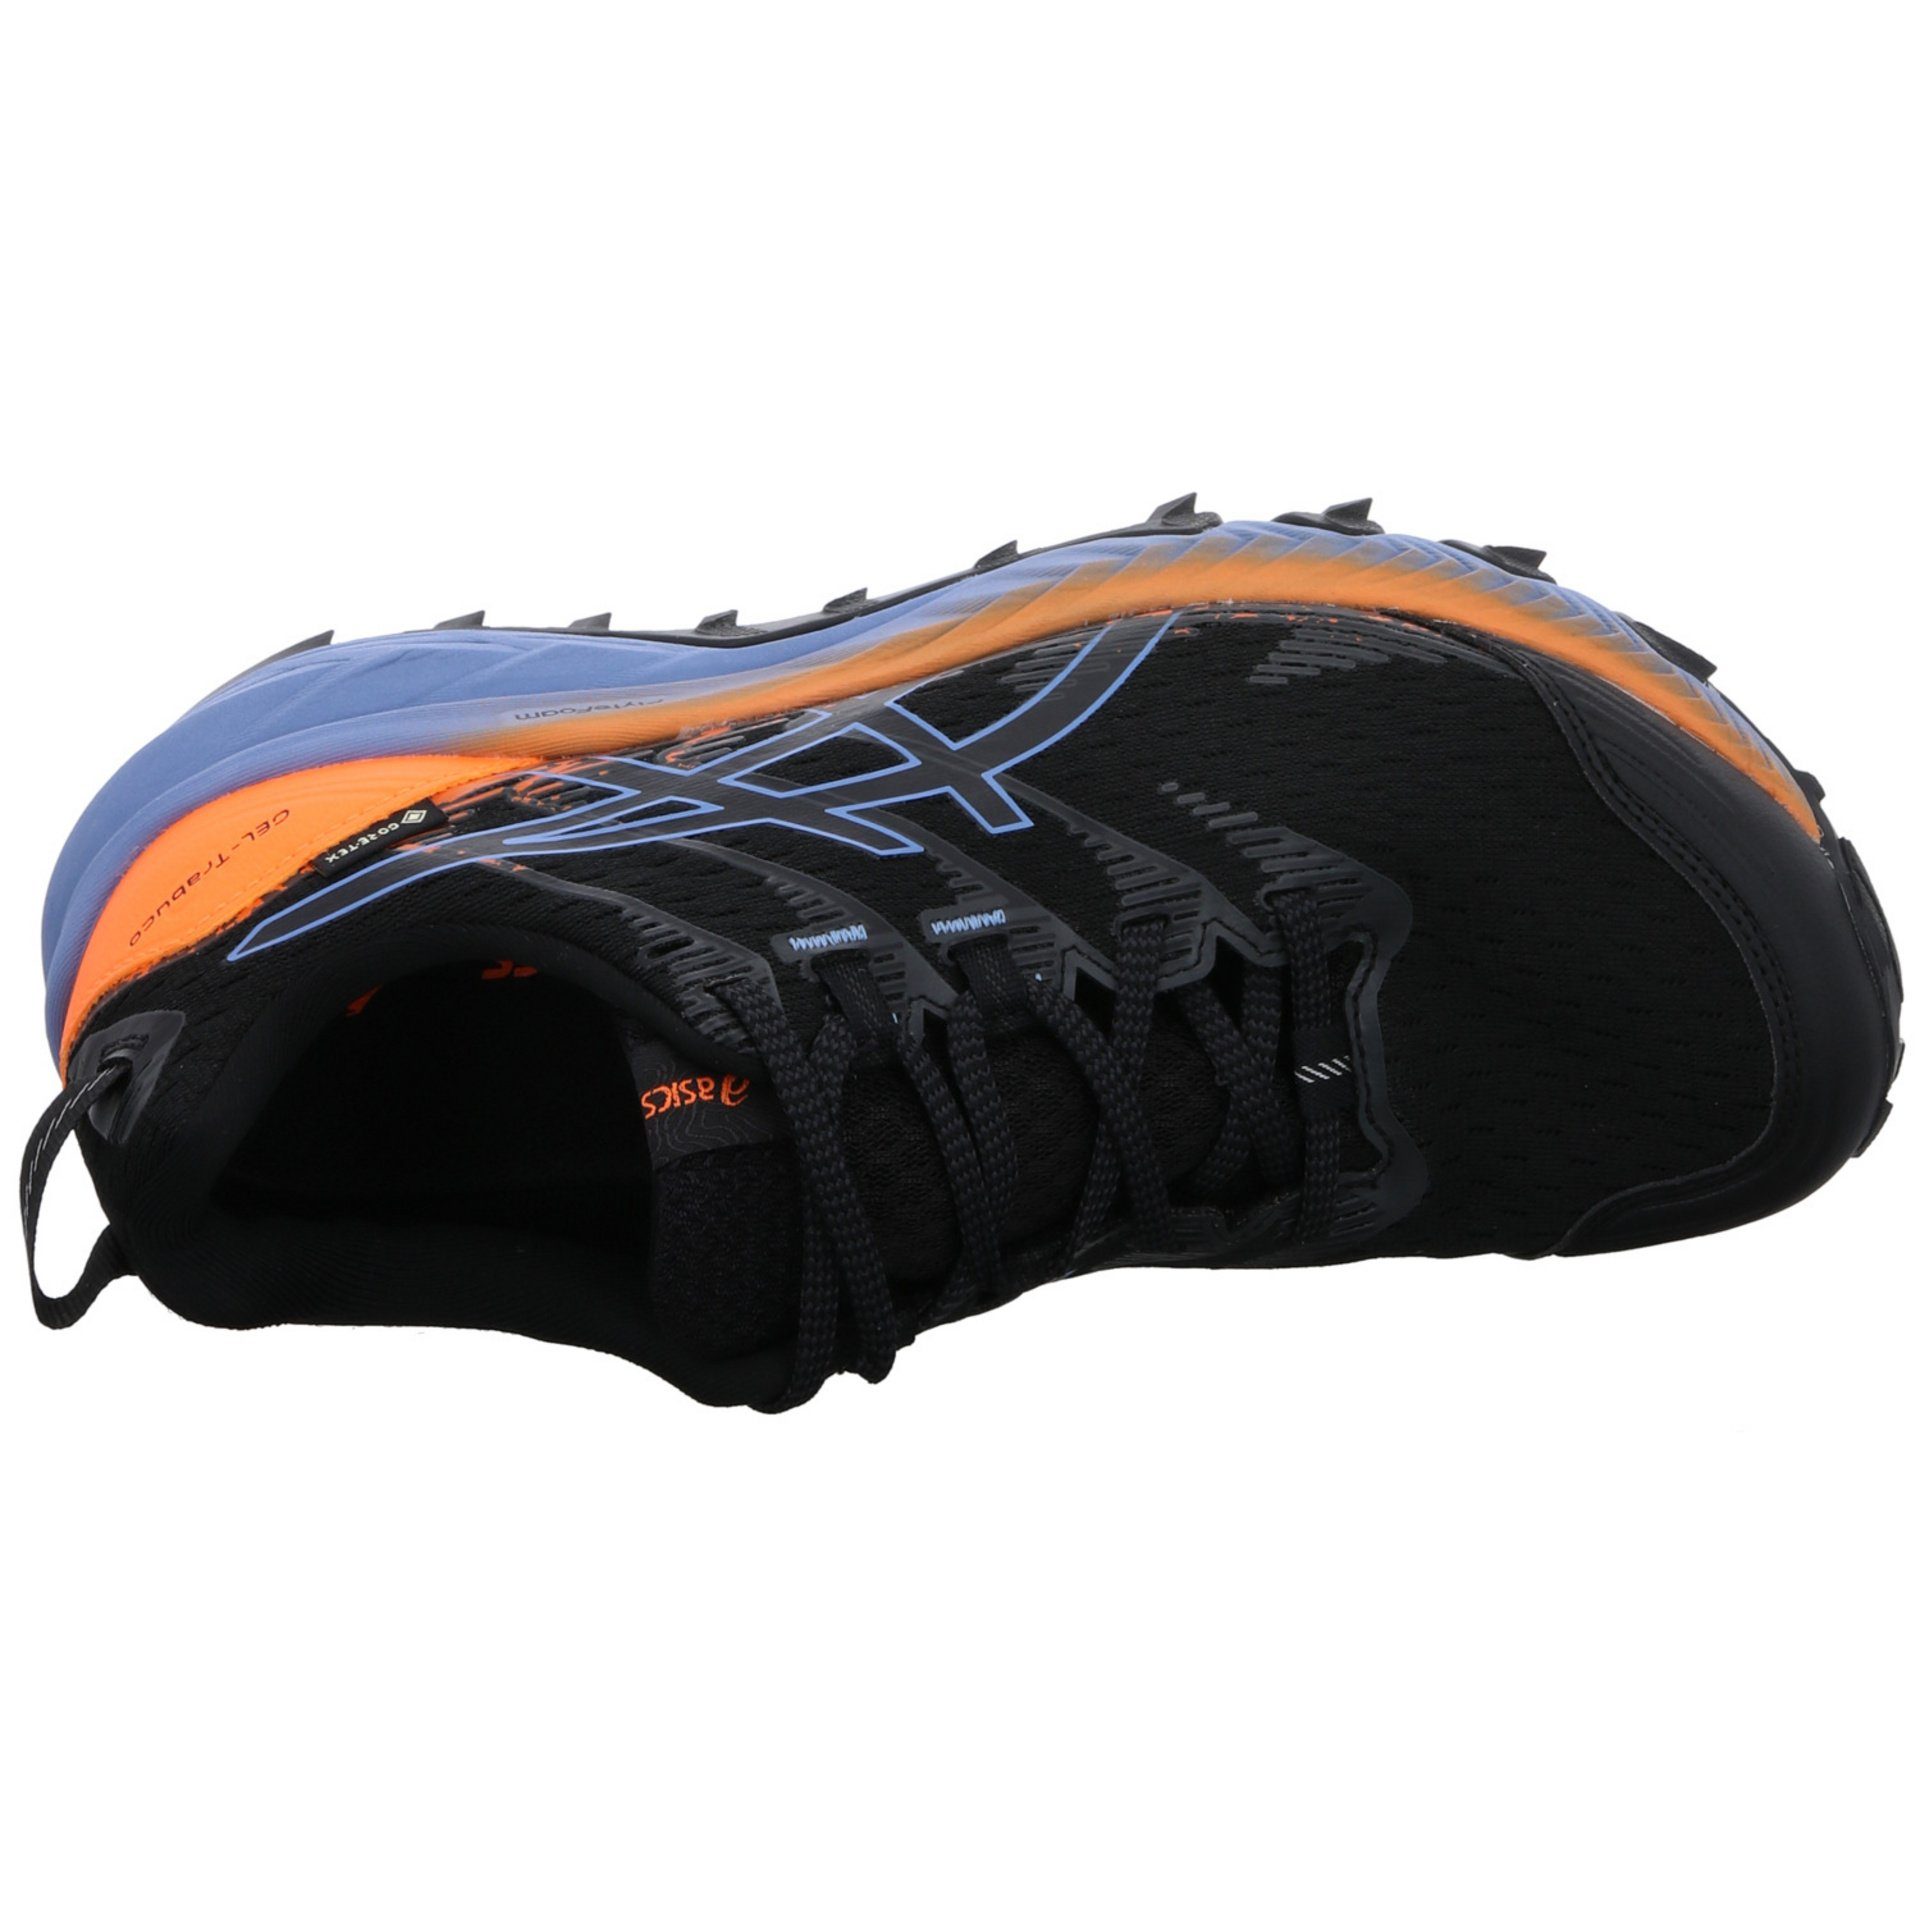 Asics Gel Trabuco 10 Trailrunner Sneaker kombi-blau/g Synthetikkombination schwarz GTX